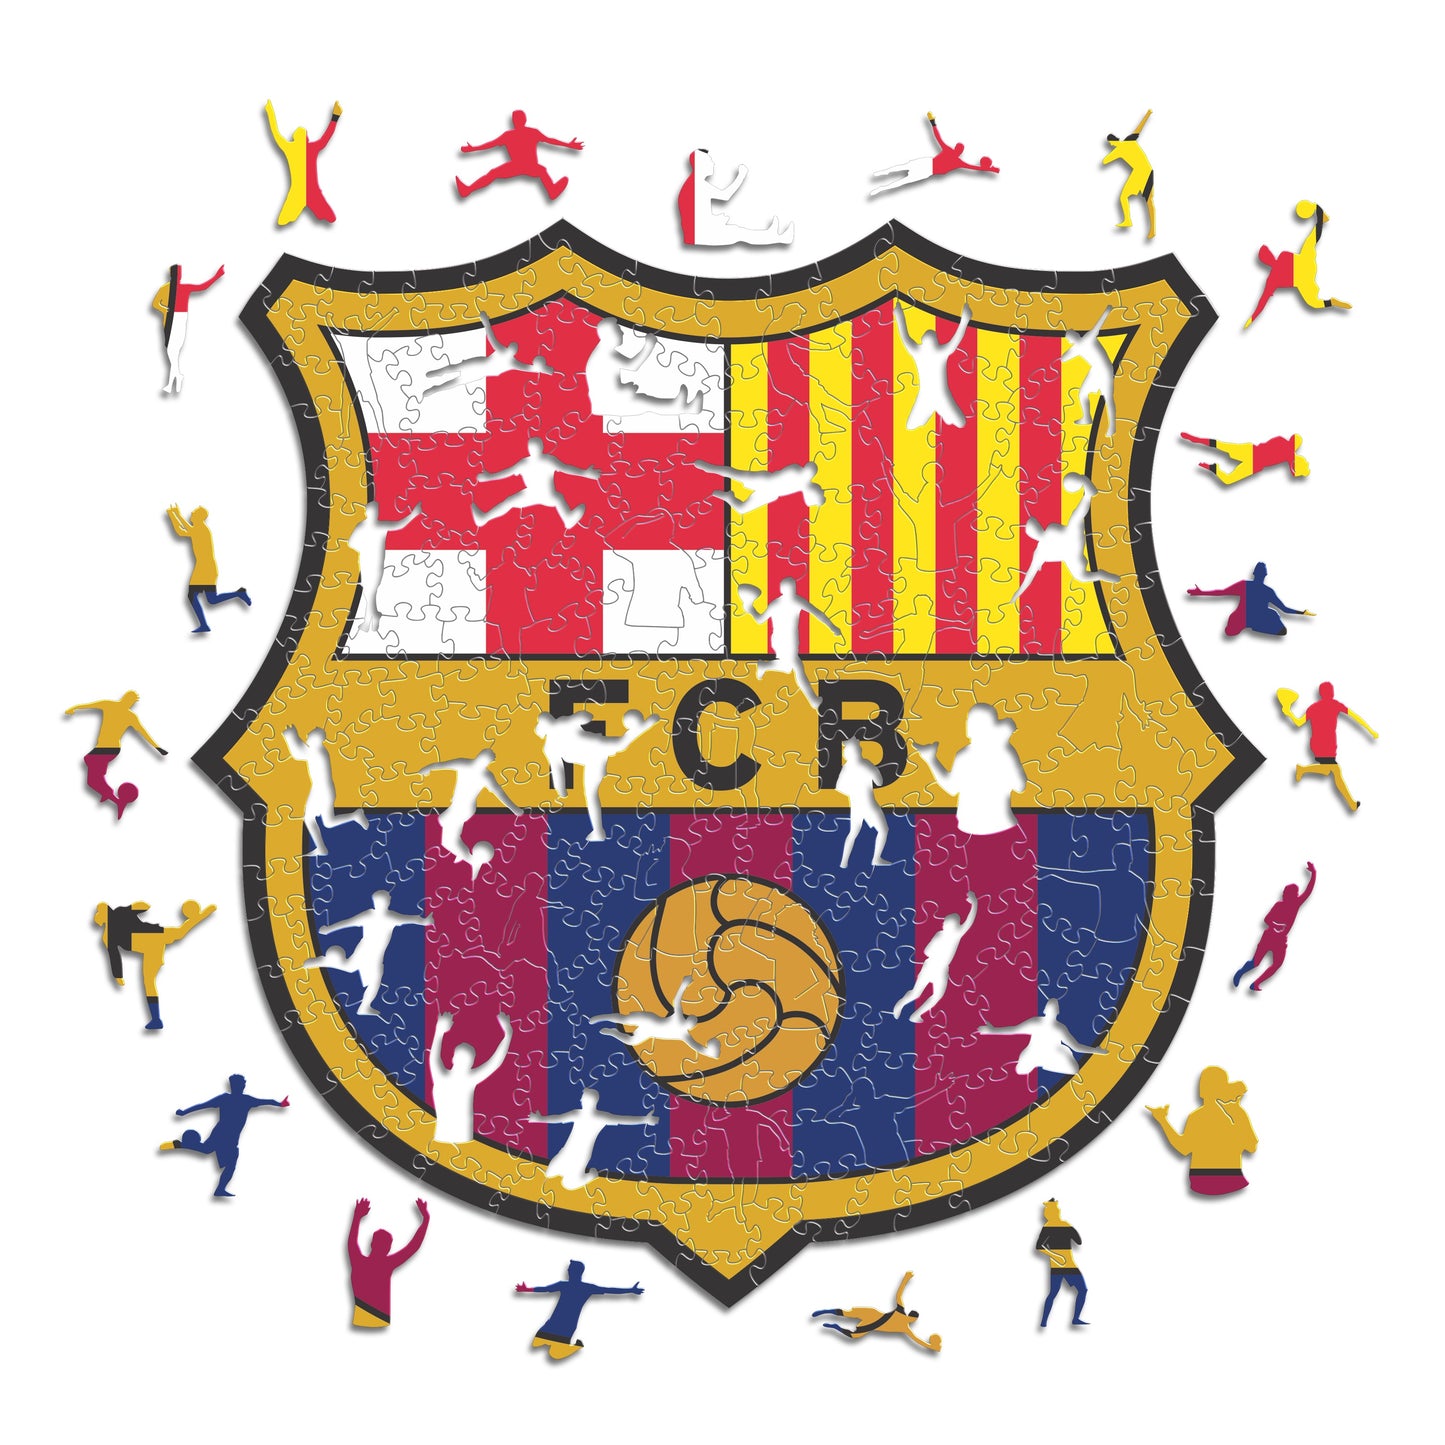 2 PACK FC Barcelona® Crest + Jersey